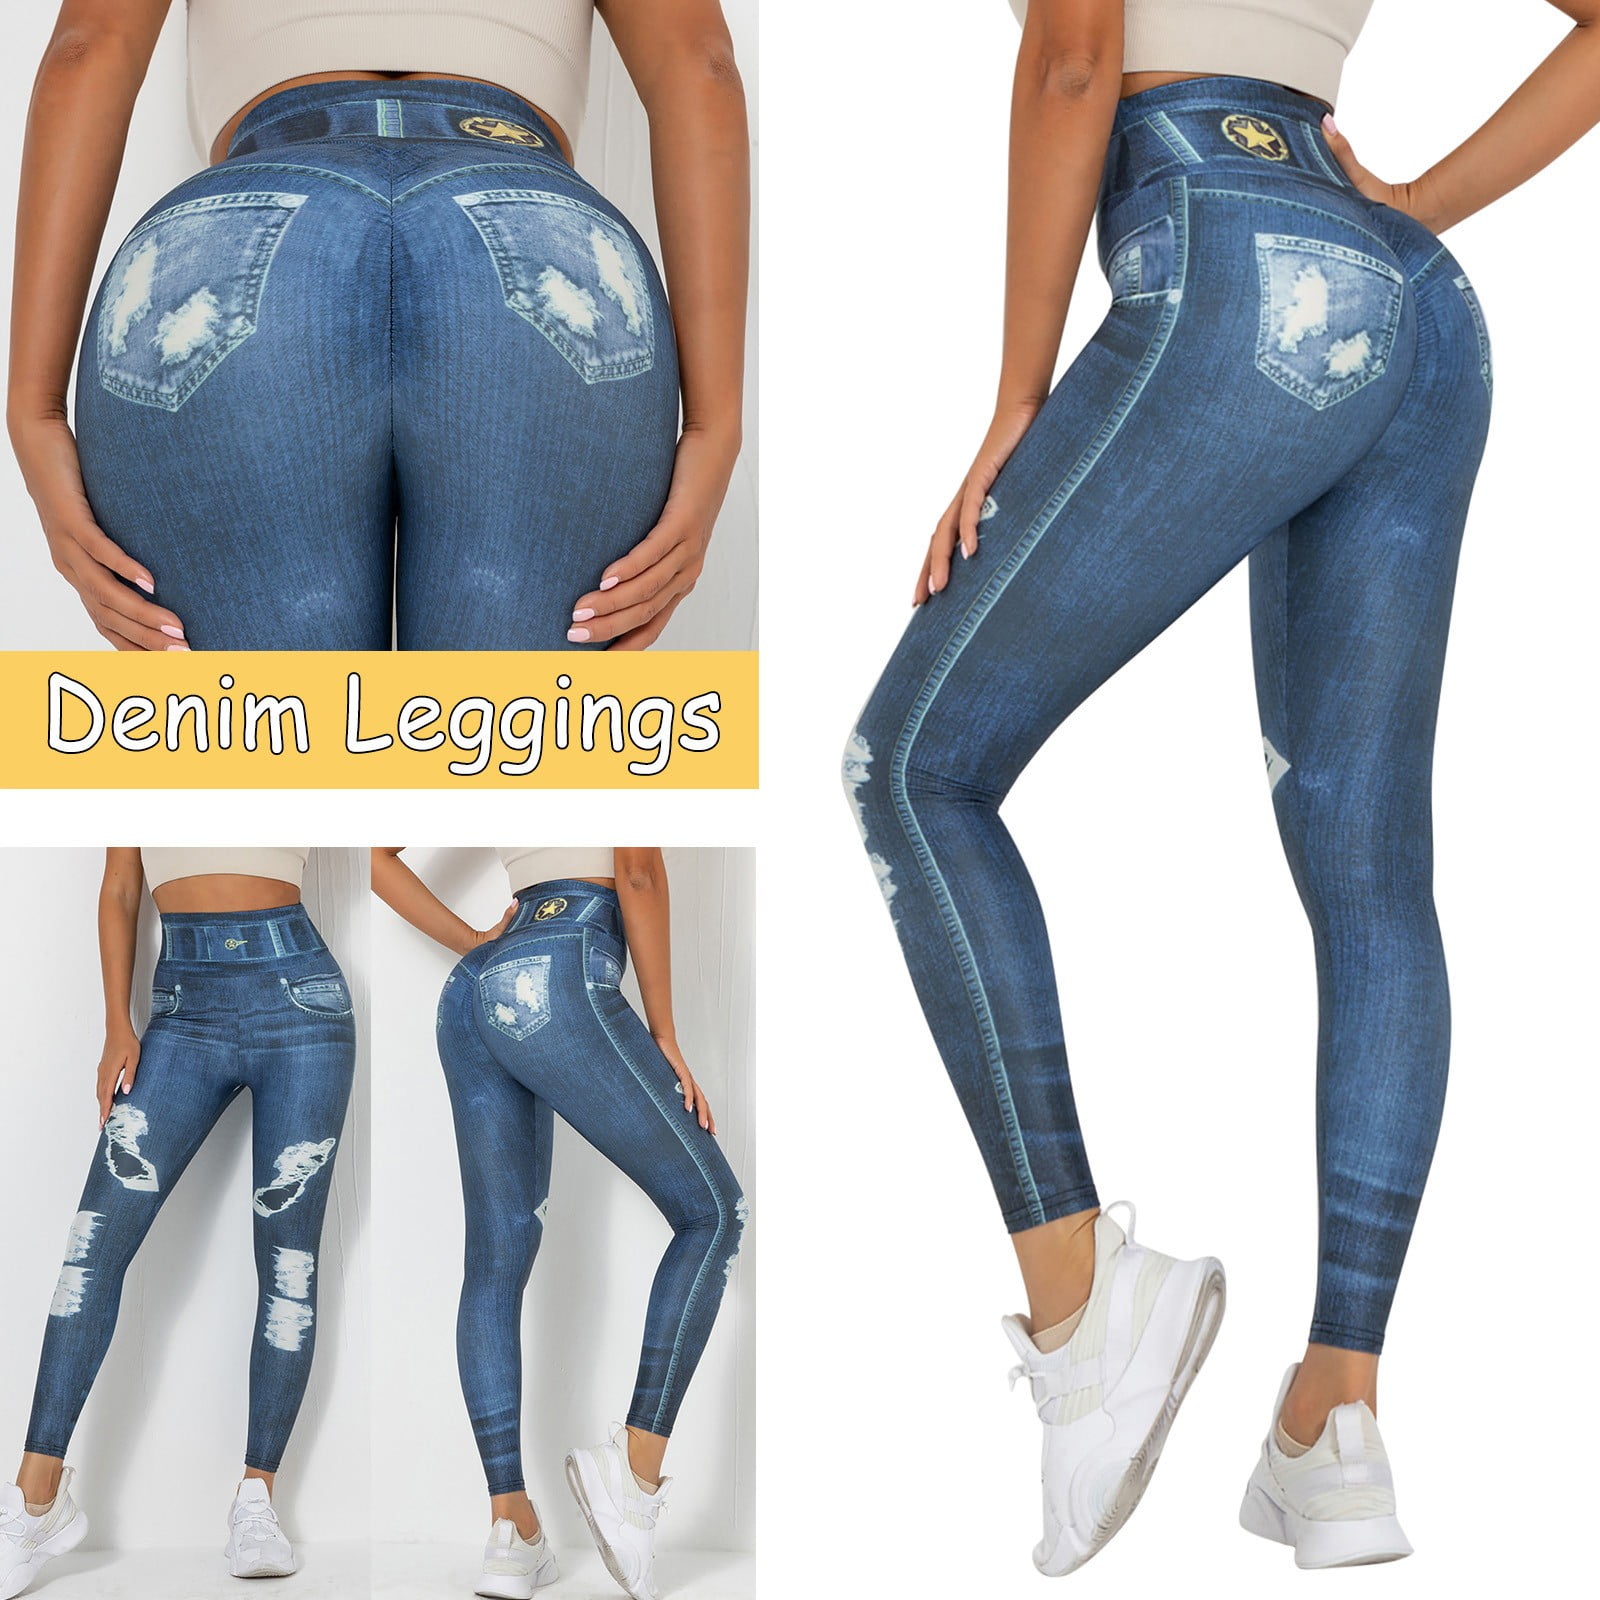 Women Skinny Leggings Denim Look Jeans Jeggings Stretchy High Waist push up  Pant 